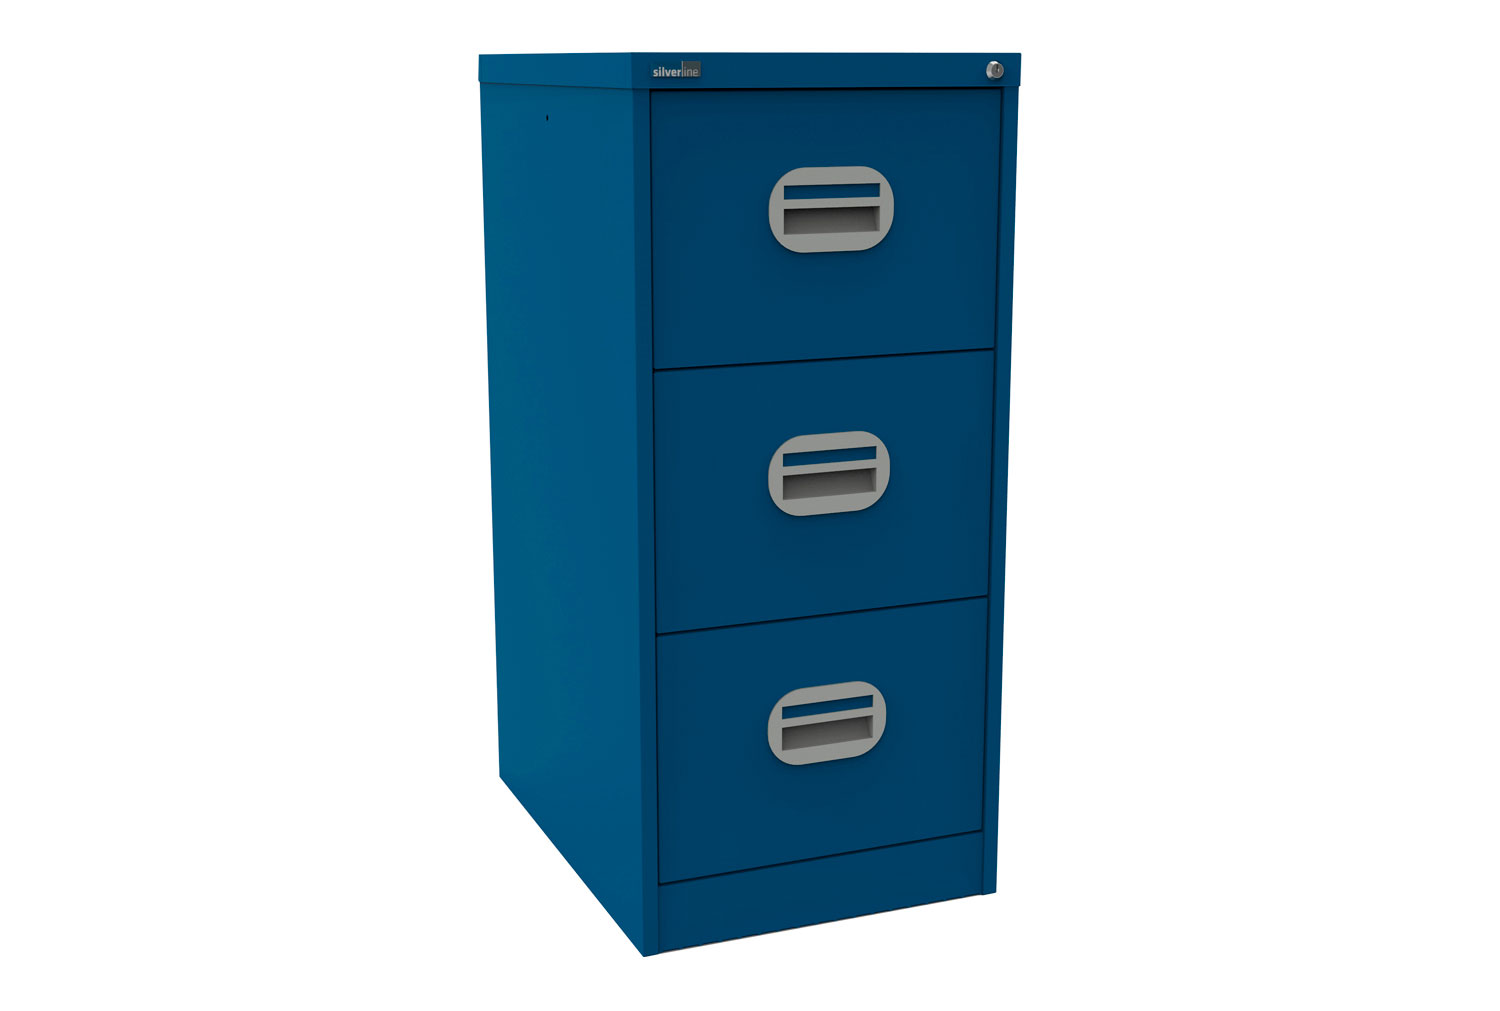 Silverline Kontrax 3 Drawer Filing Cabinet, 3 Drawer - 46wx62dx101h (cm), Blue